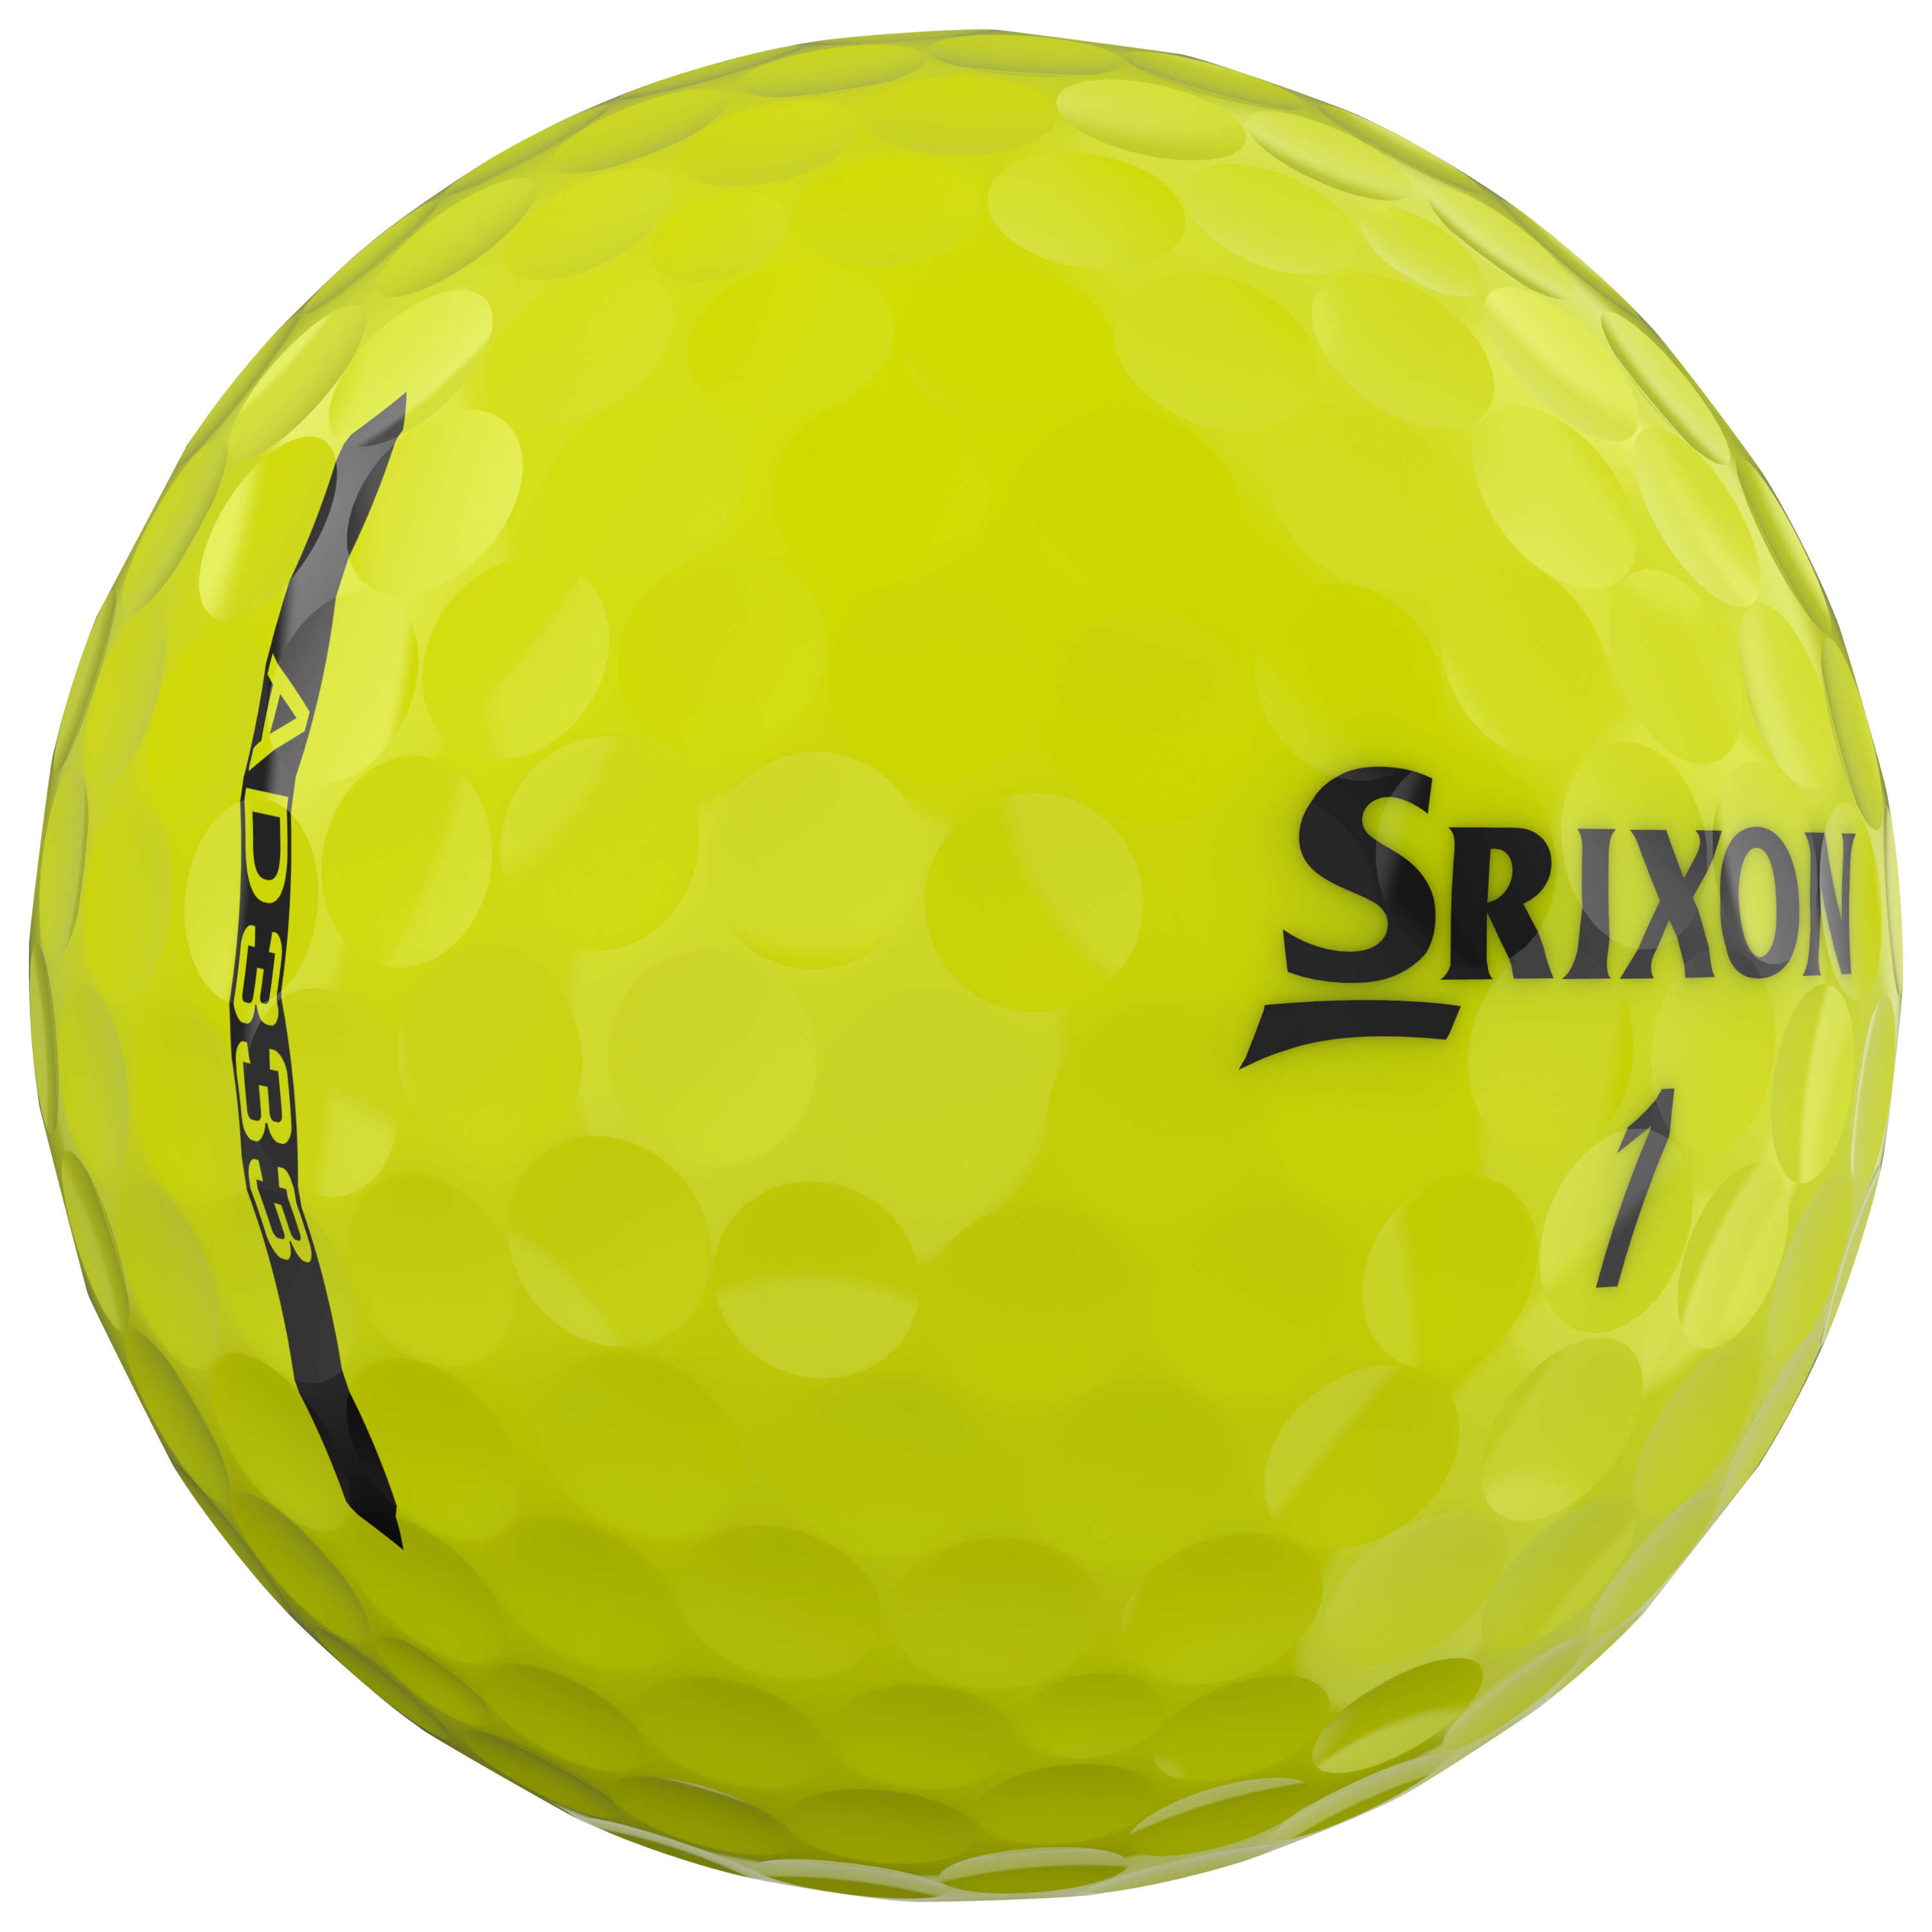 Srixon AD333 Golfbälle, yellow